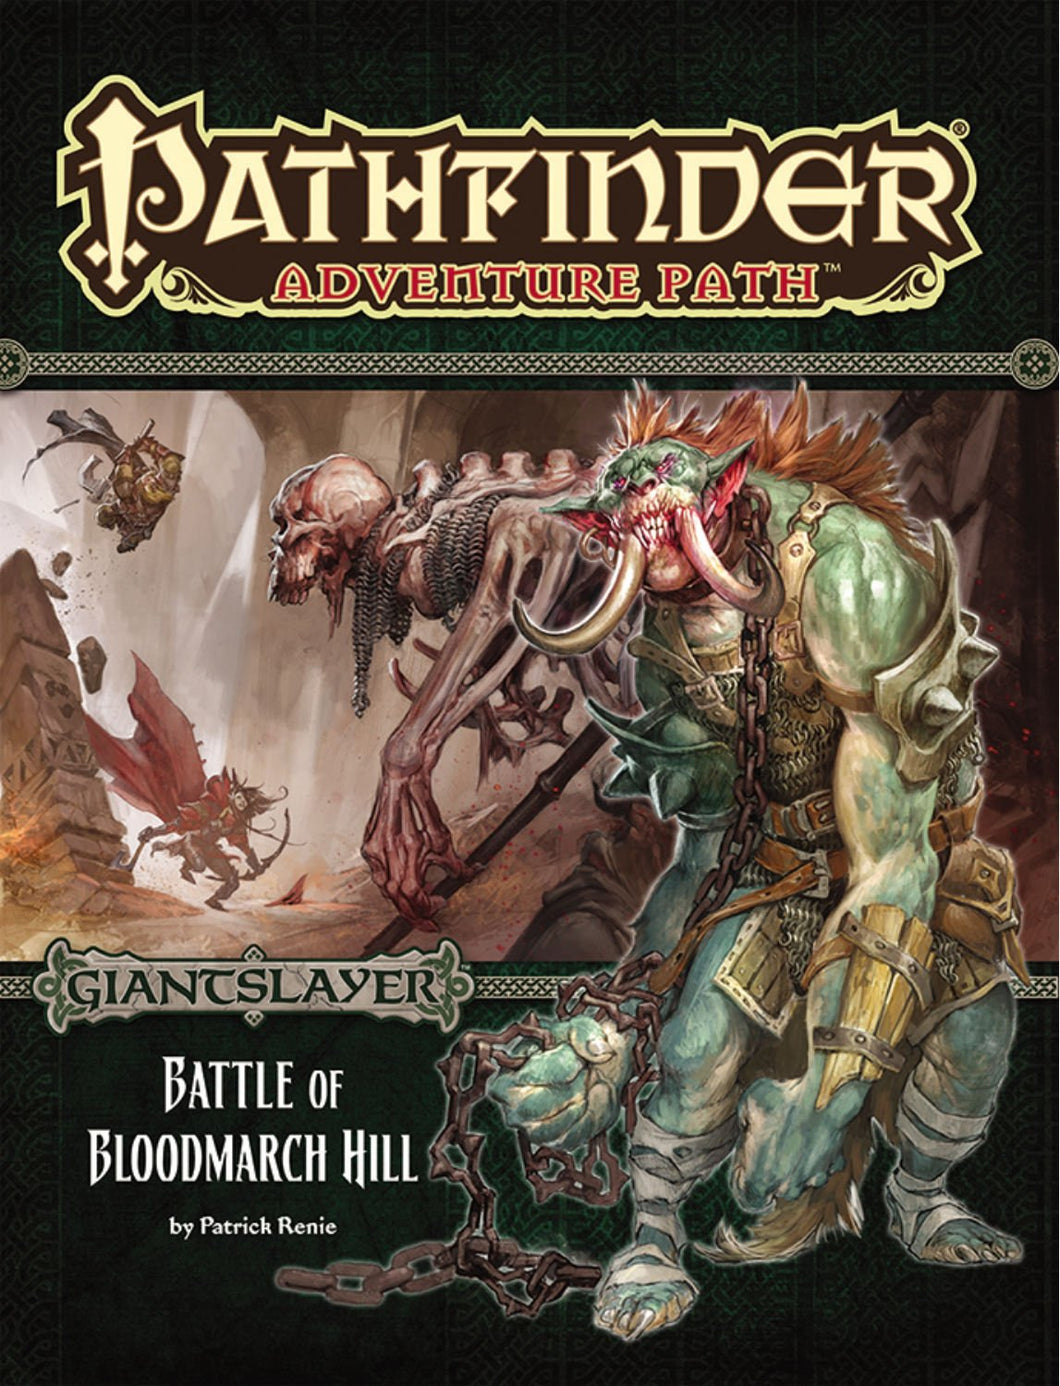 Pathfinder : Adventure Path : Giantslayer Part 1 - Battle of Bloodmarch Hill